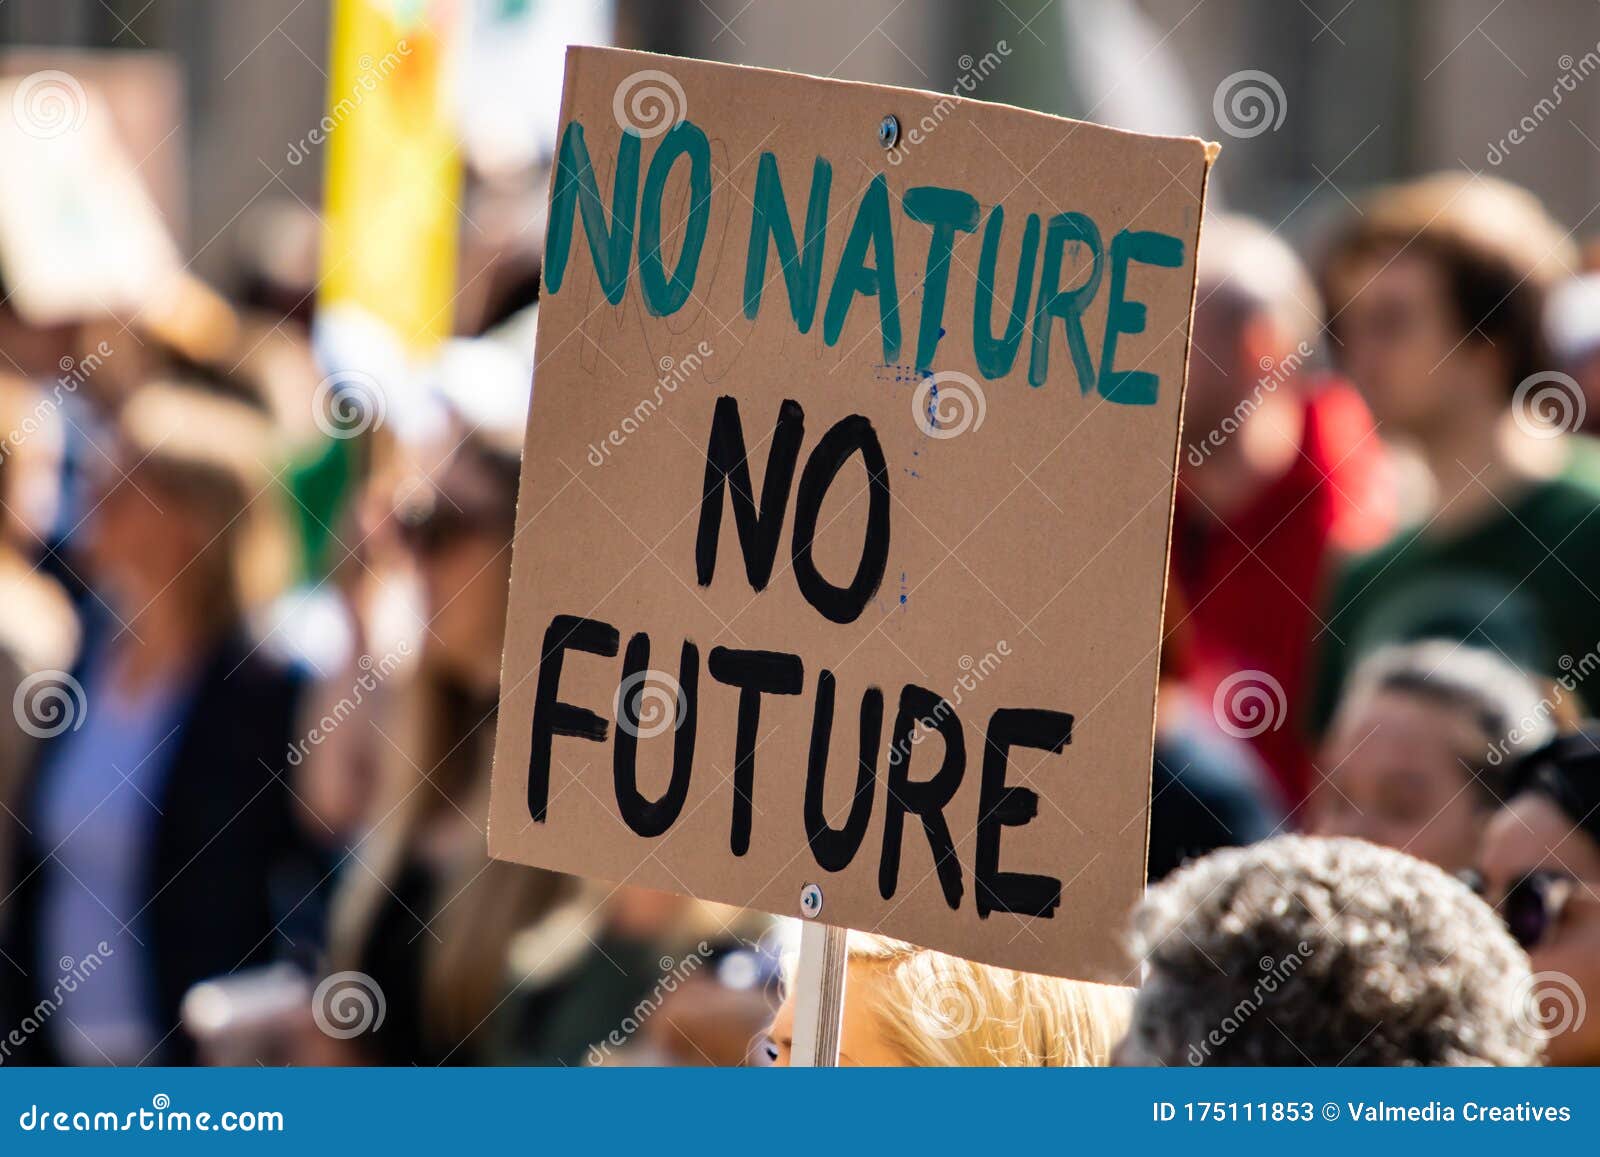 Environmental Activist - Choose Nature - Environmental Activist